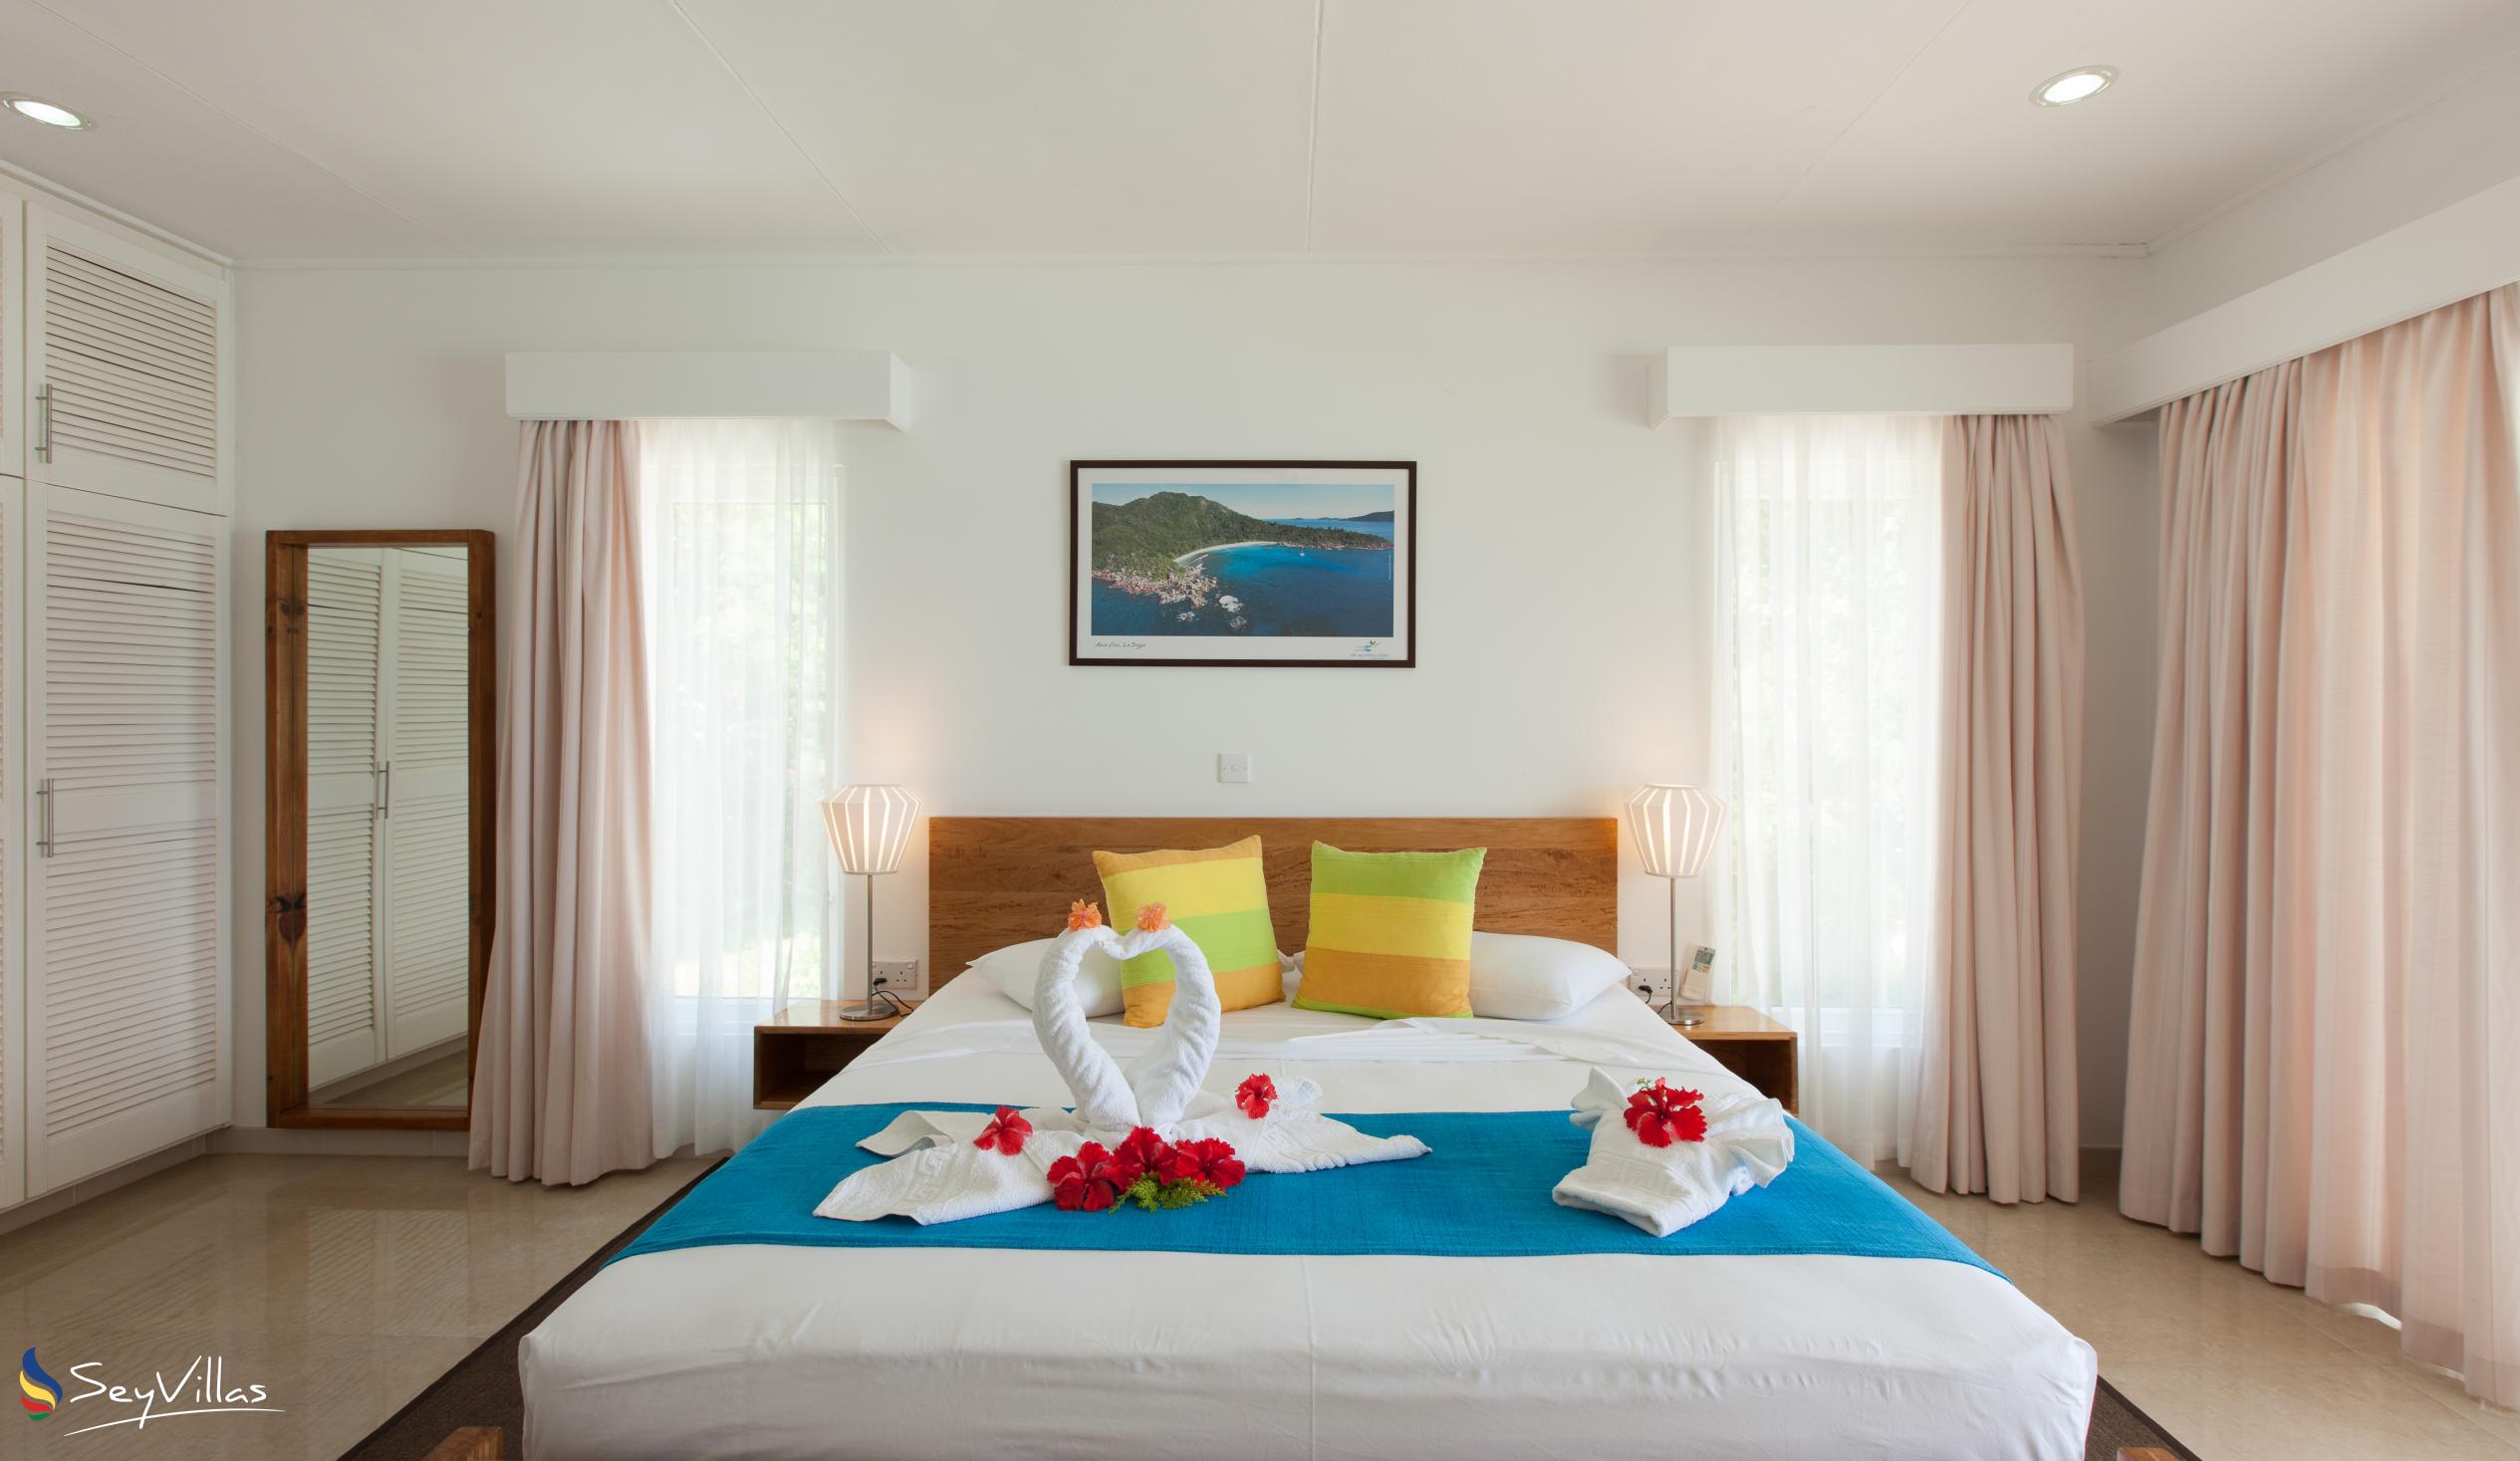 Photo 40: Marie-France Beach Front Apartments - Standard Room - La Digue (Seychelles)